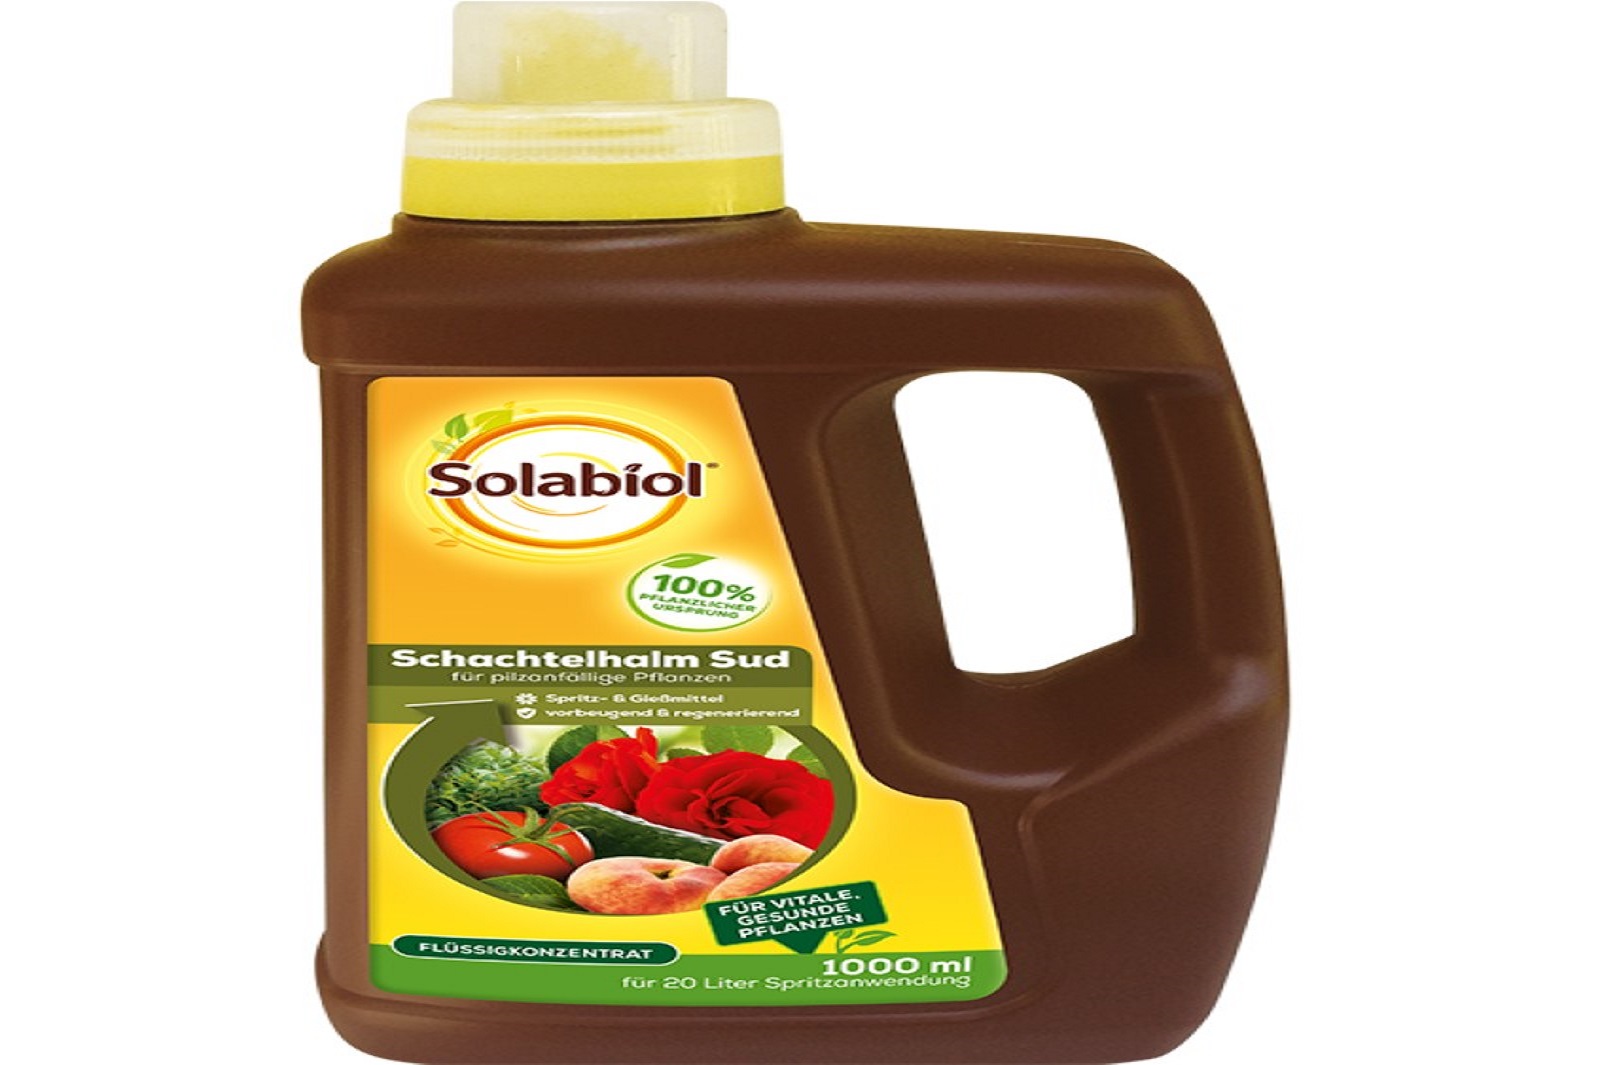 Solabiol Schachtelhalm Sud 1 Liter